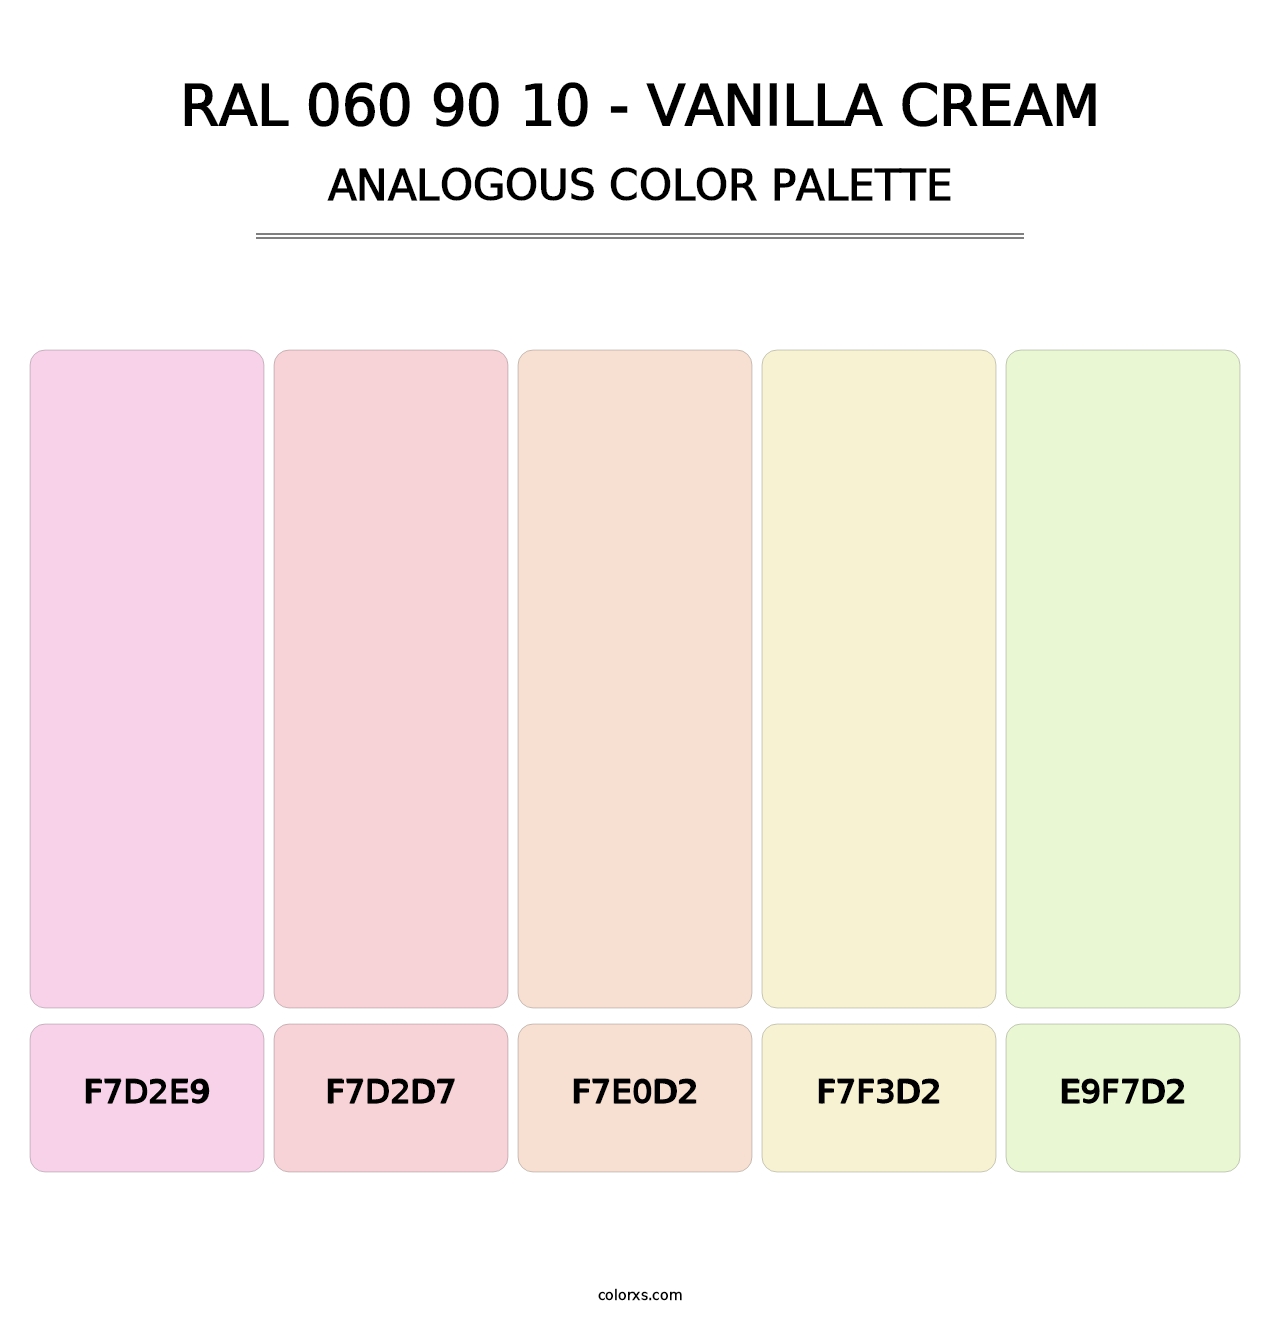 RAL 060 90 10 - Vanilla Cream - Analogous Color Palette